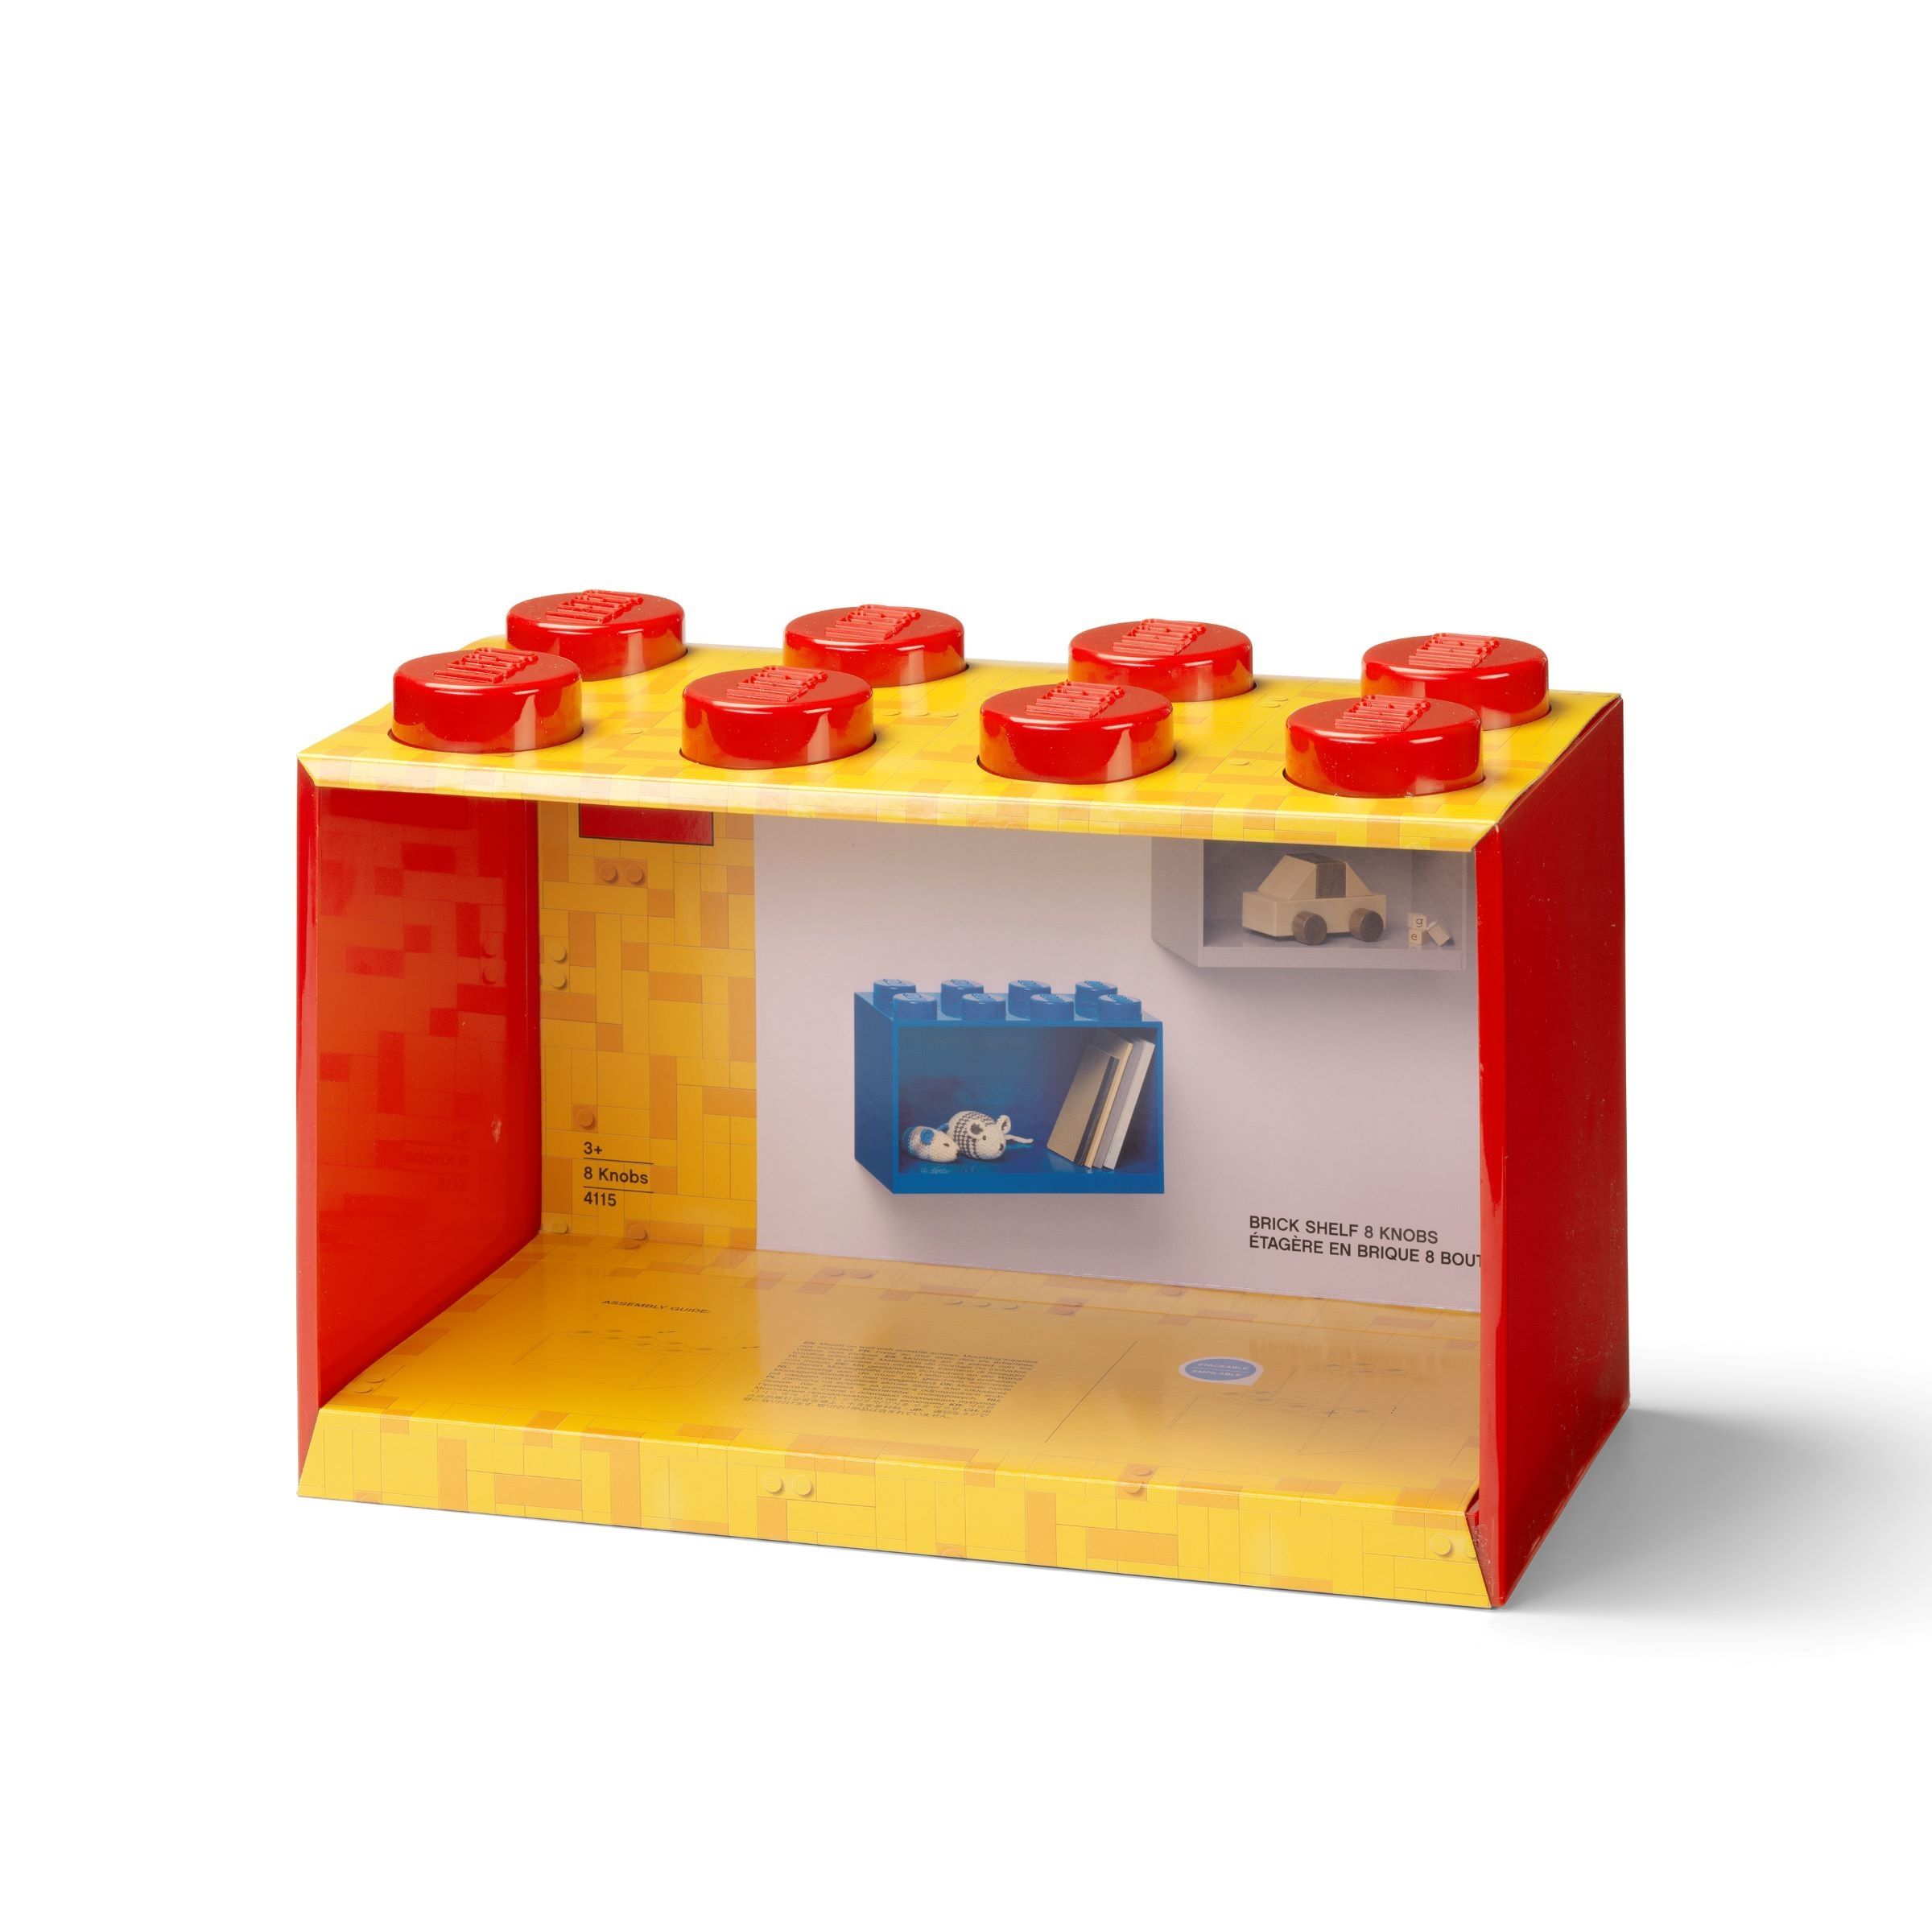 LEGO Gear 5007284 Steinregal mit 8 Noppen in Rot LEGO_5007284_alt1.jpg